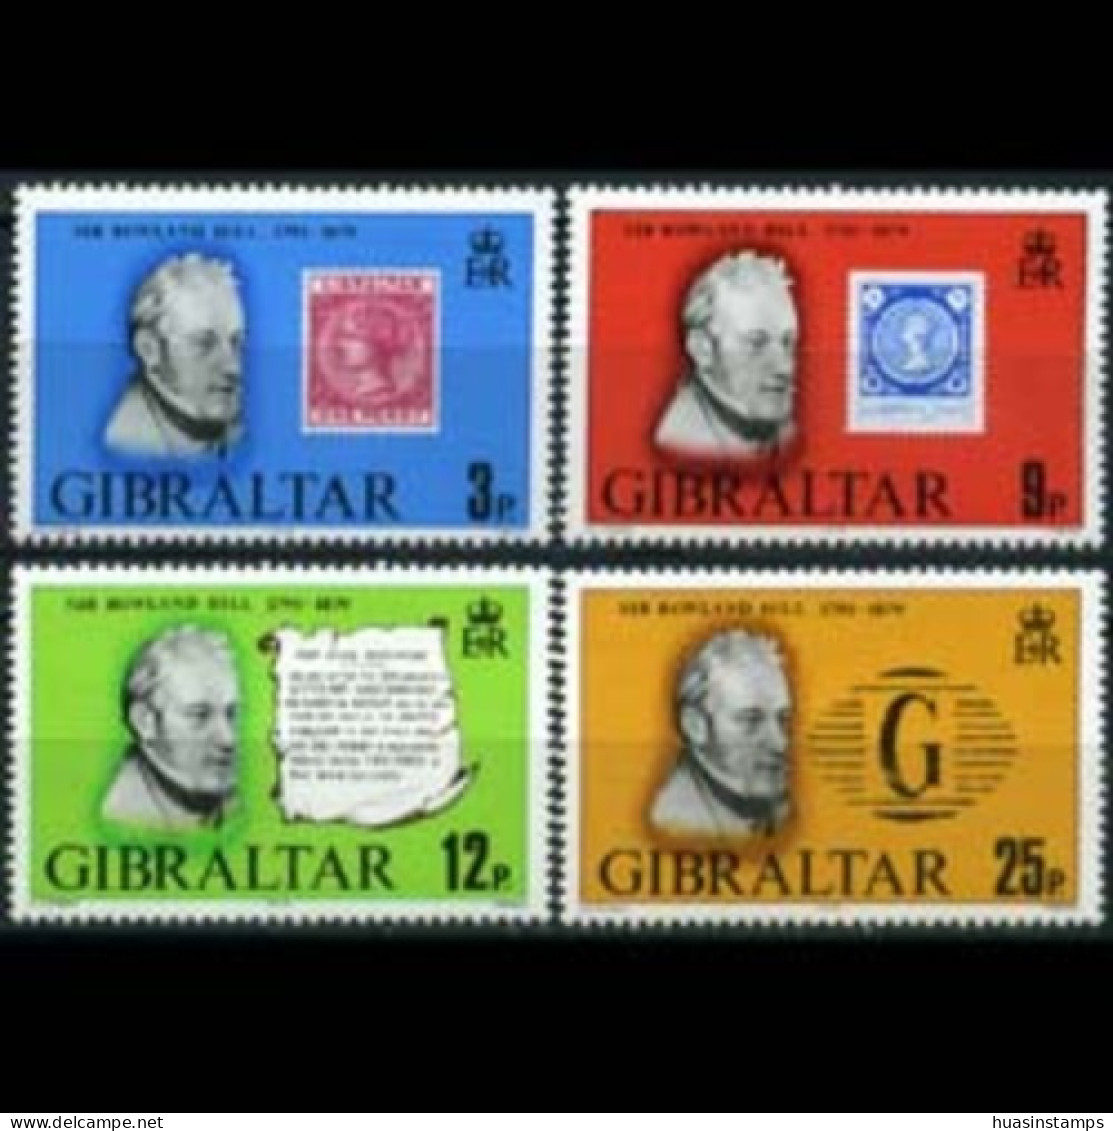 GIBRALTAR 1979 - #378-81 R.Hill Set Of 4 MNH Short Perf. - Gibraltar